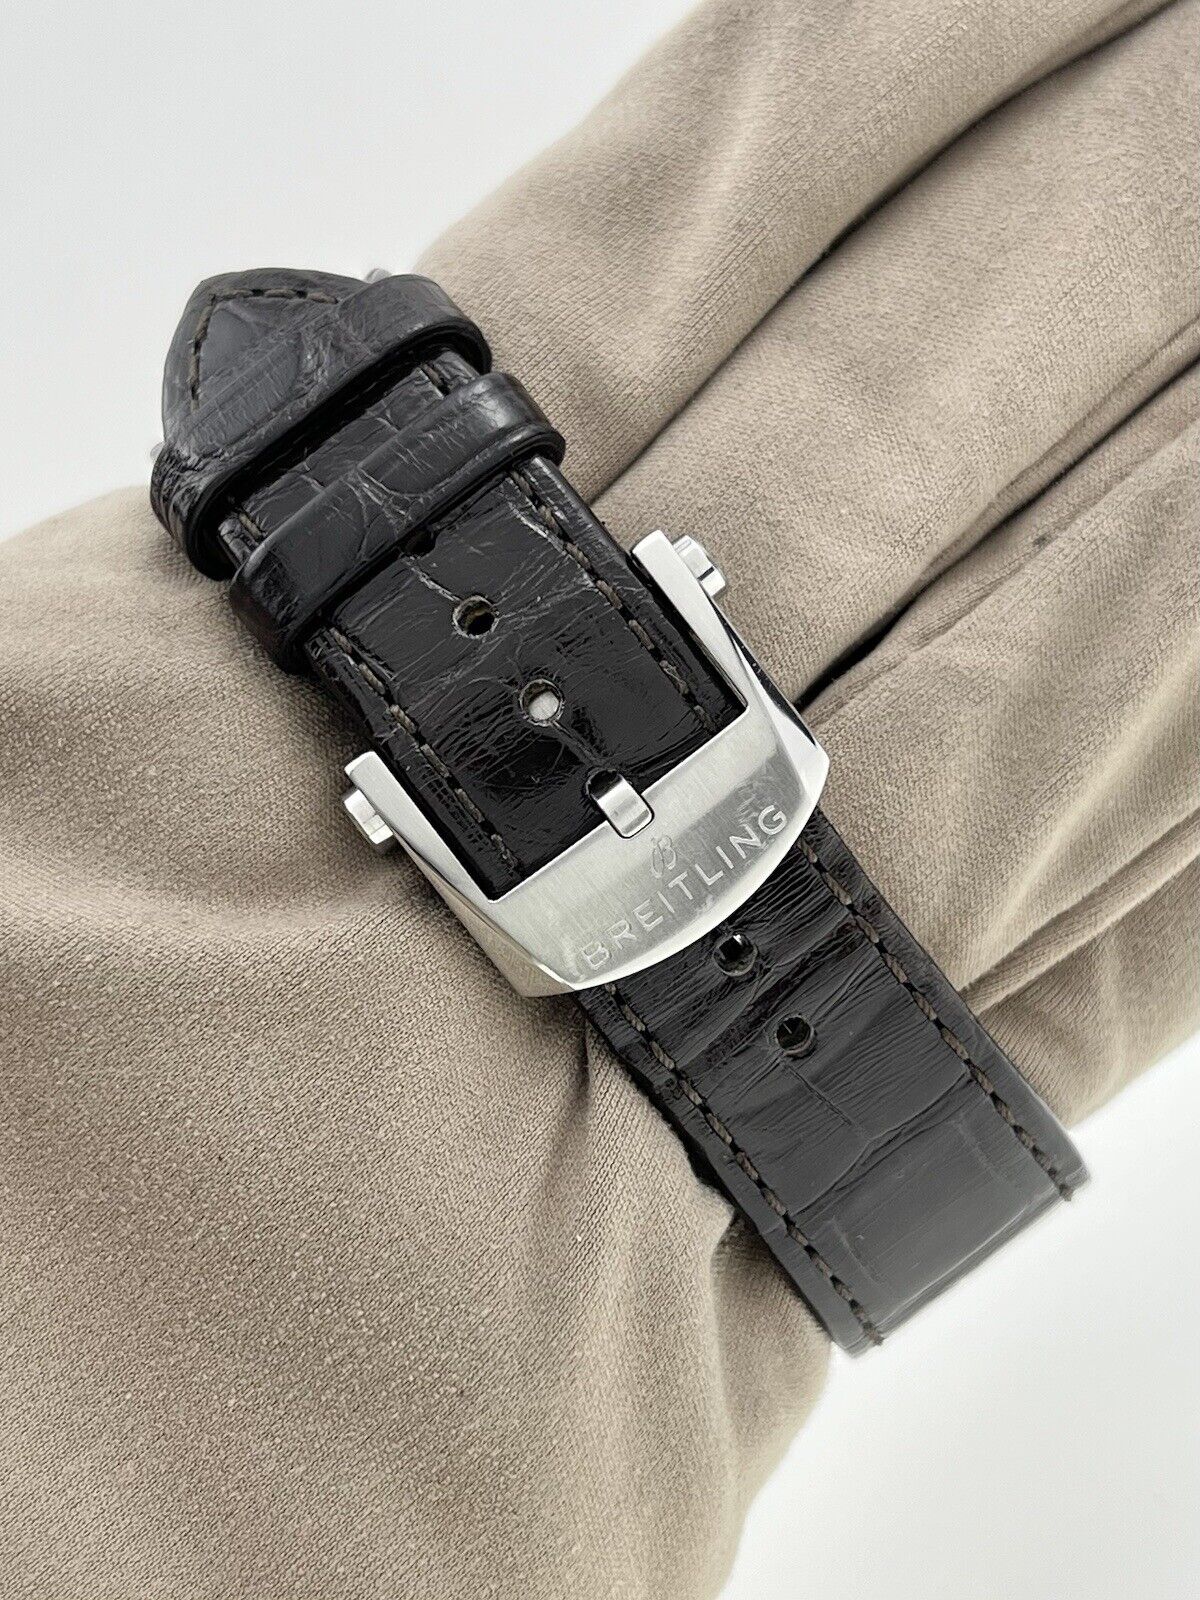 Breitling Premier B25 Datora Steel 42mm Automatic Men’s Watch AB2510